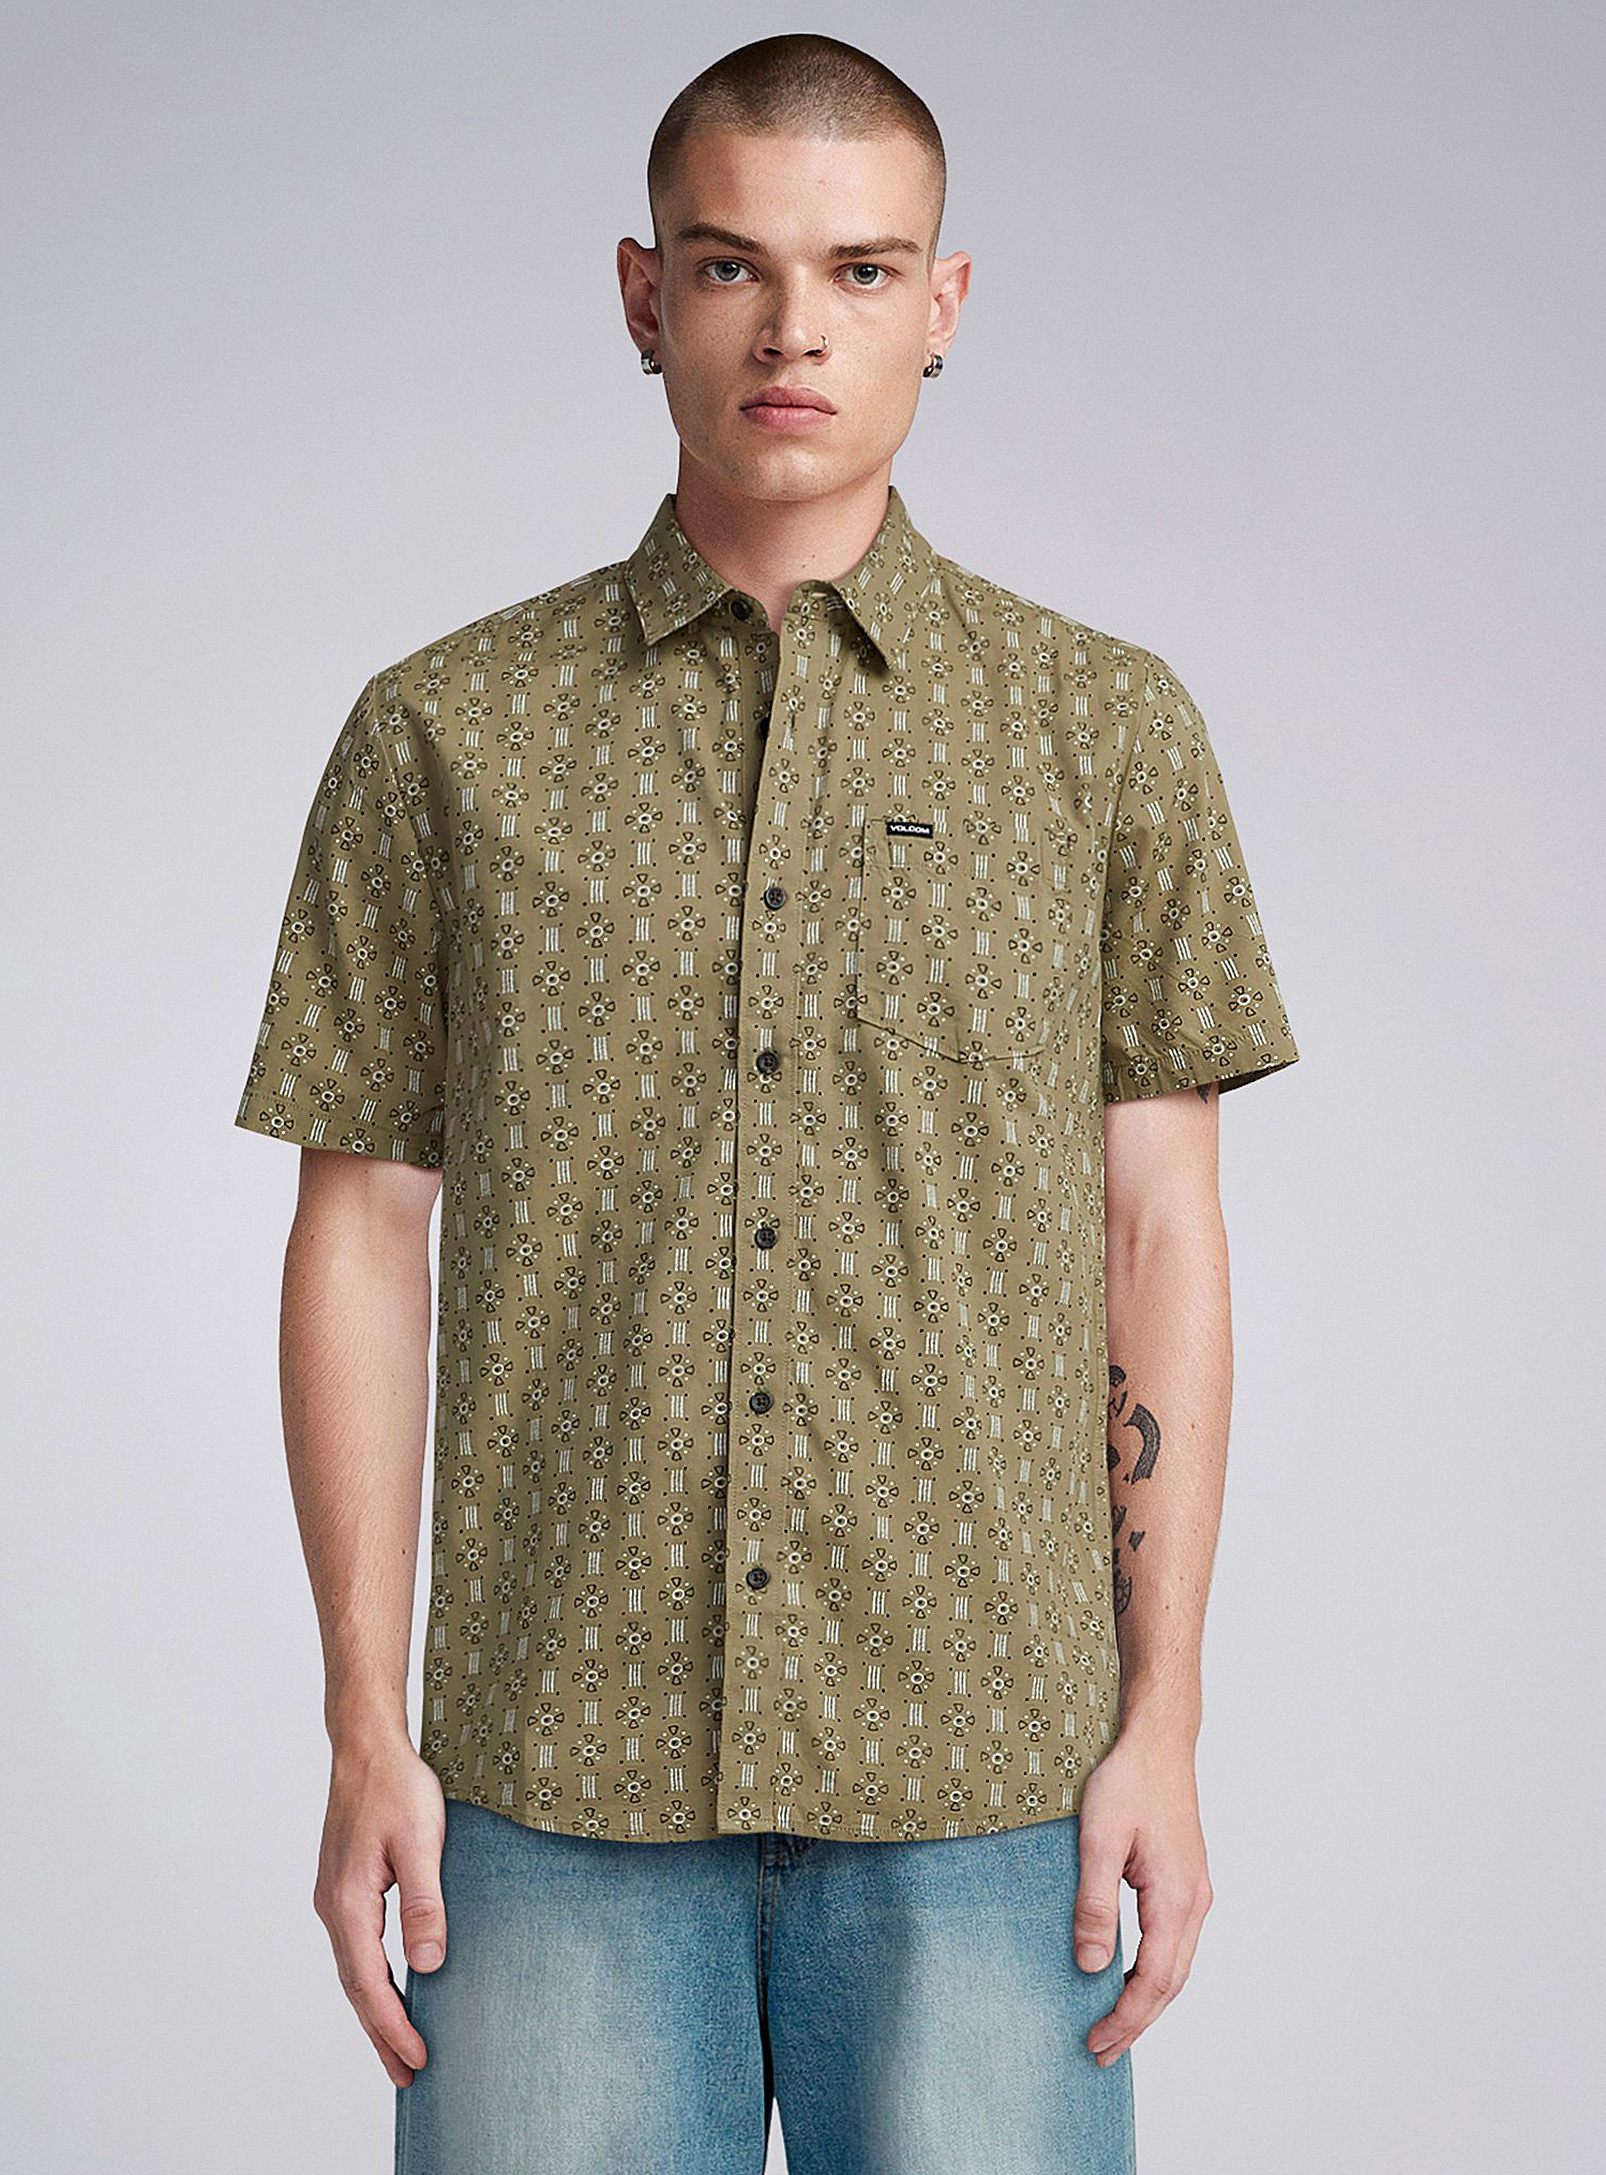 Volcom - Men's Khaki geo pattern shirt